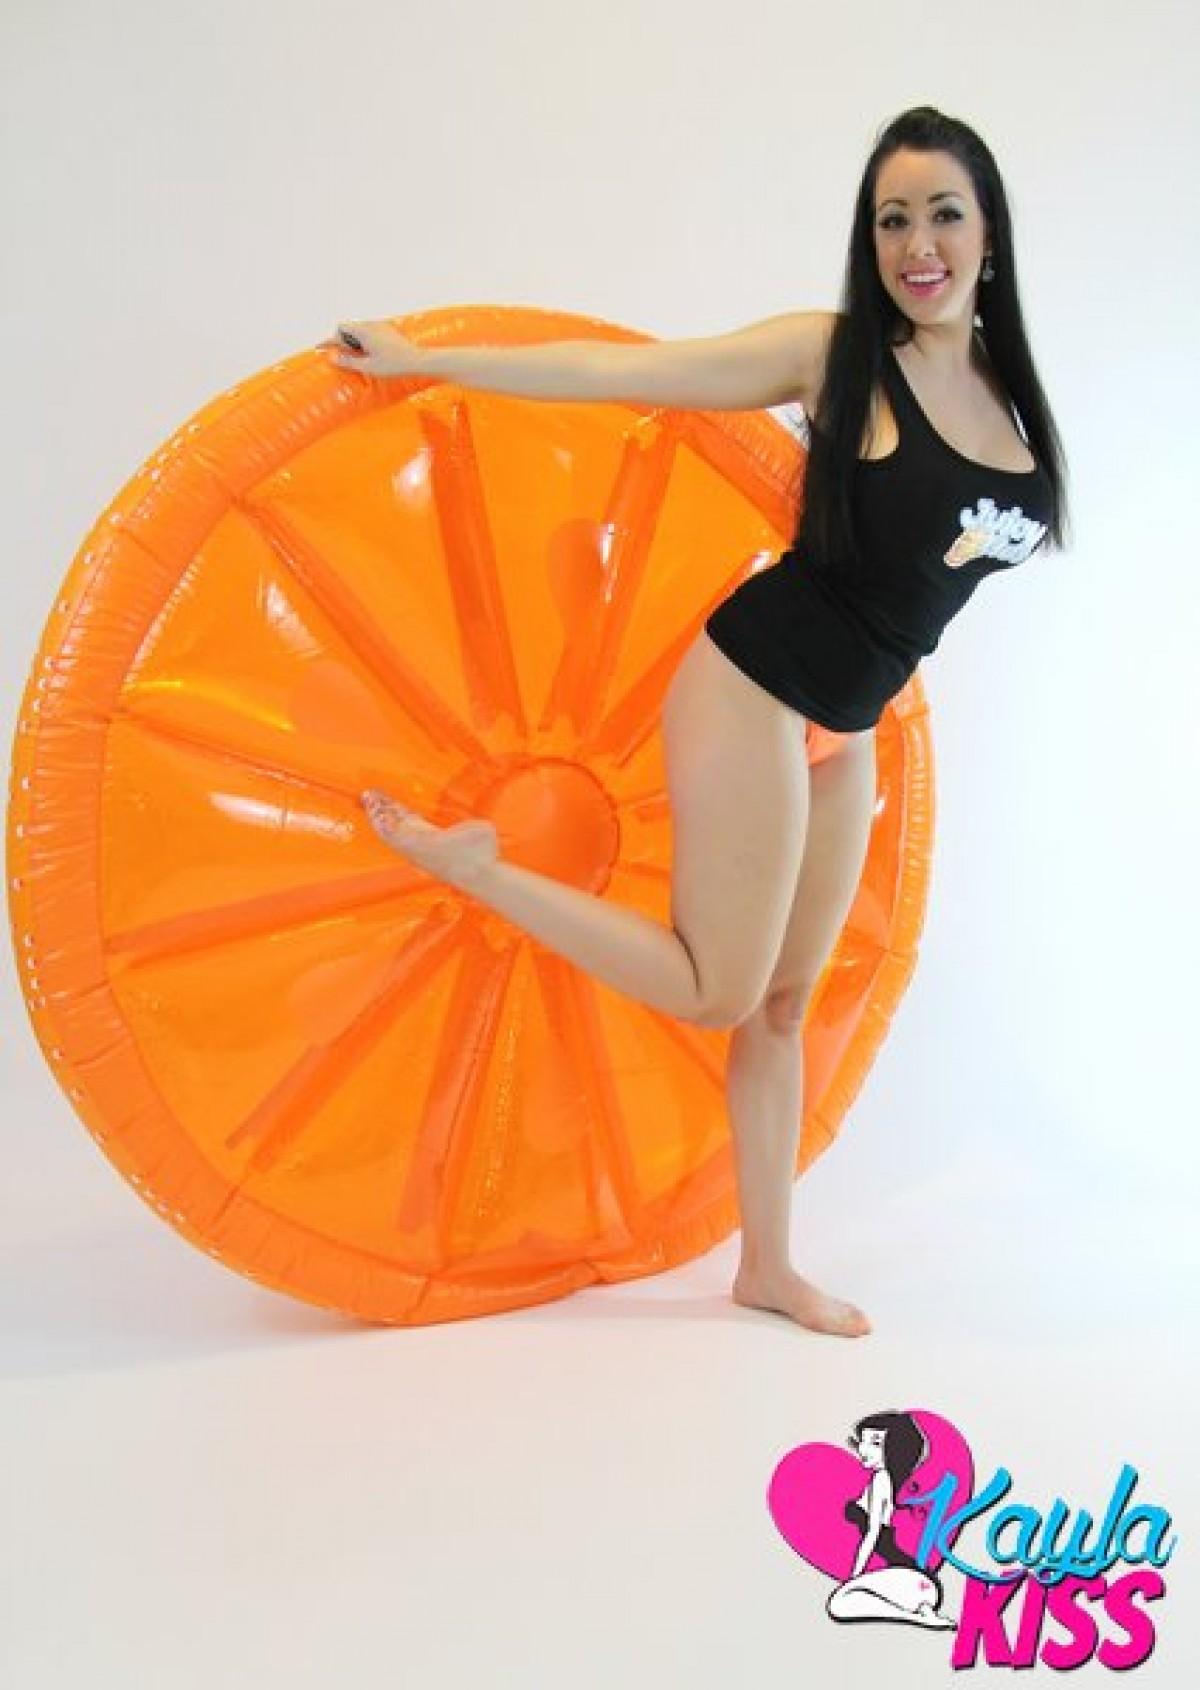 Kayla Kiss strips for you on her big orange inflatable #58180056